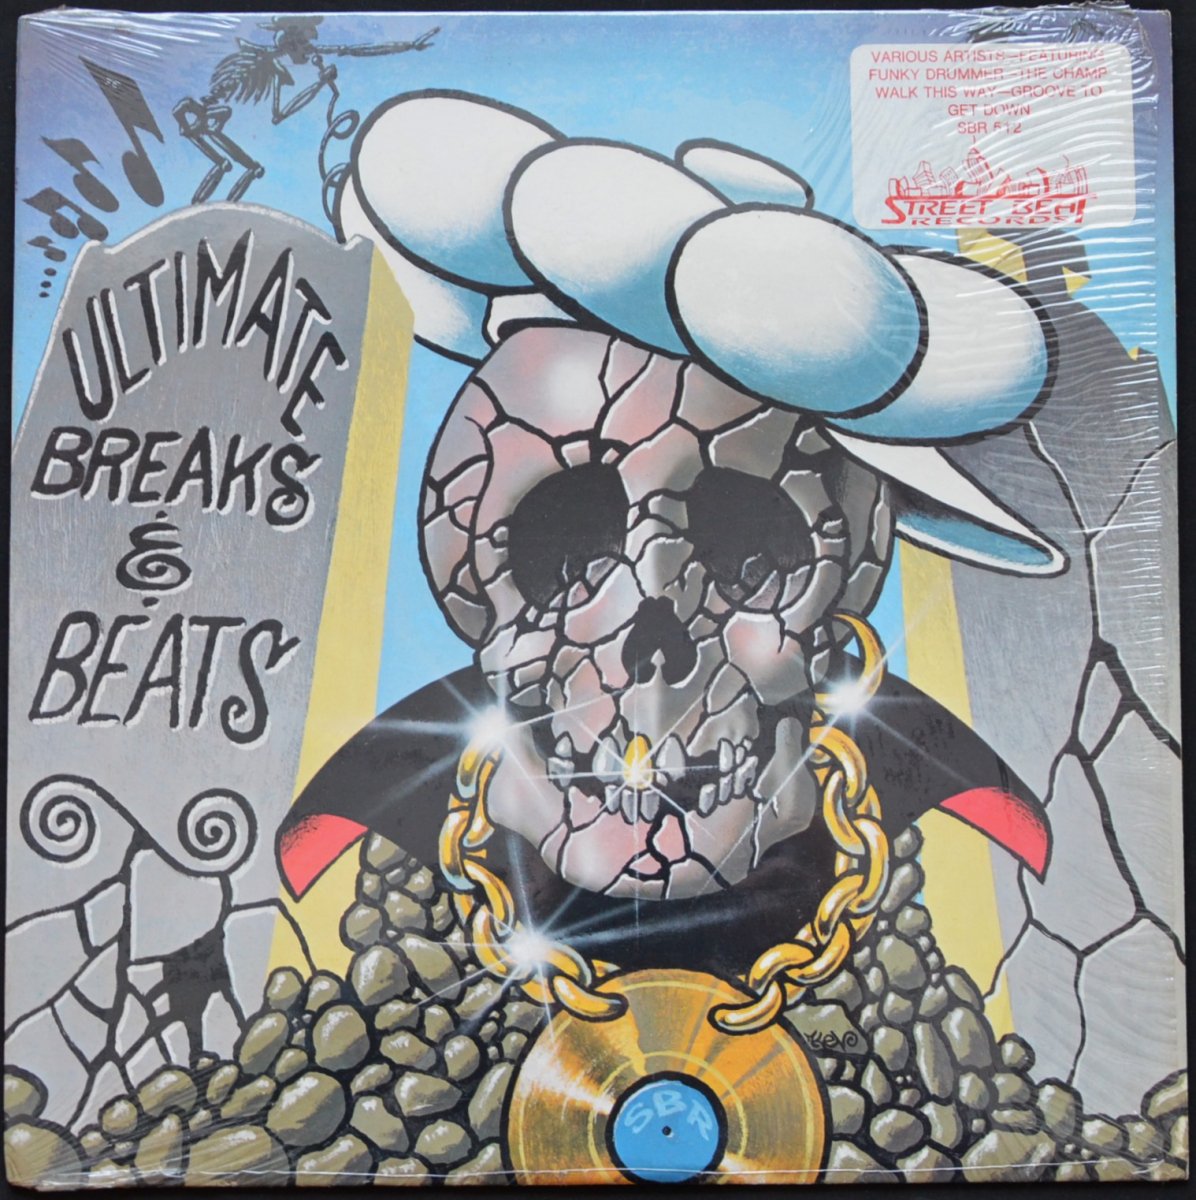 ULTIMATE BREAKS & BEATS - HIP TANK RECORDS